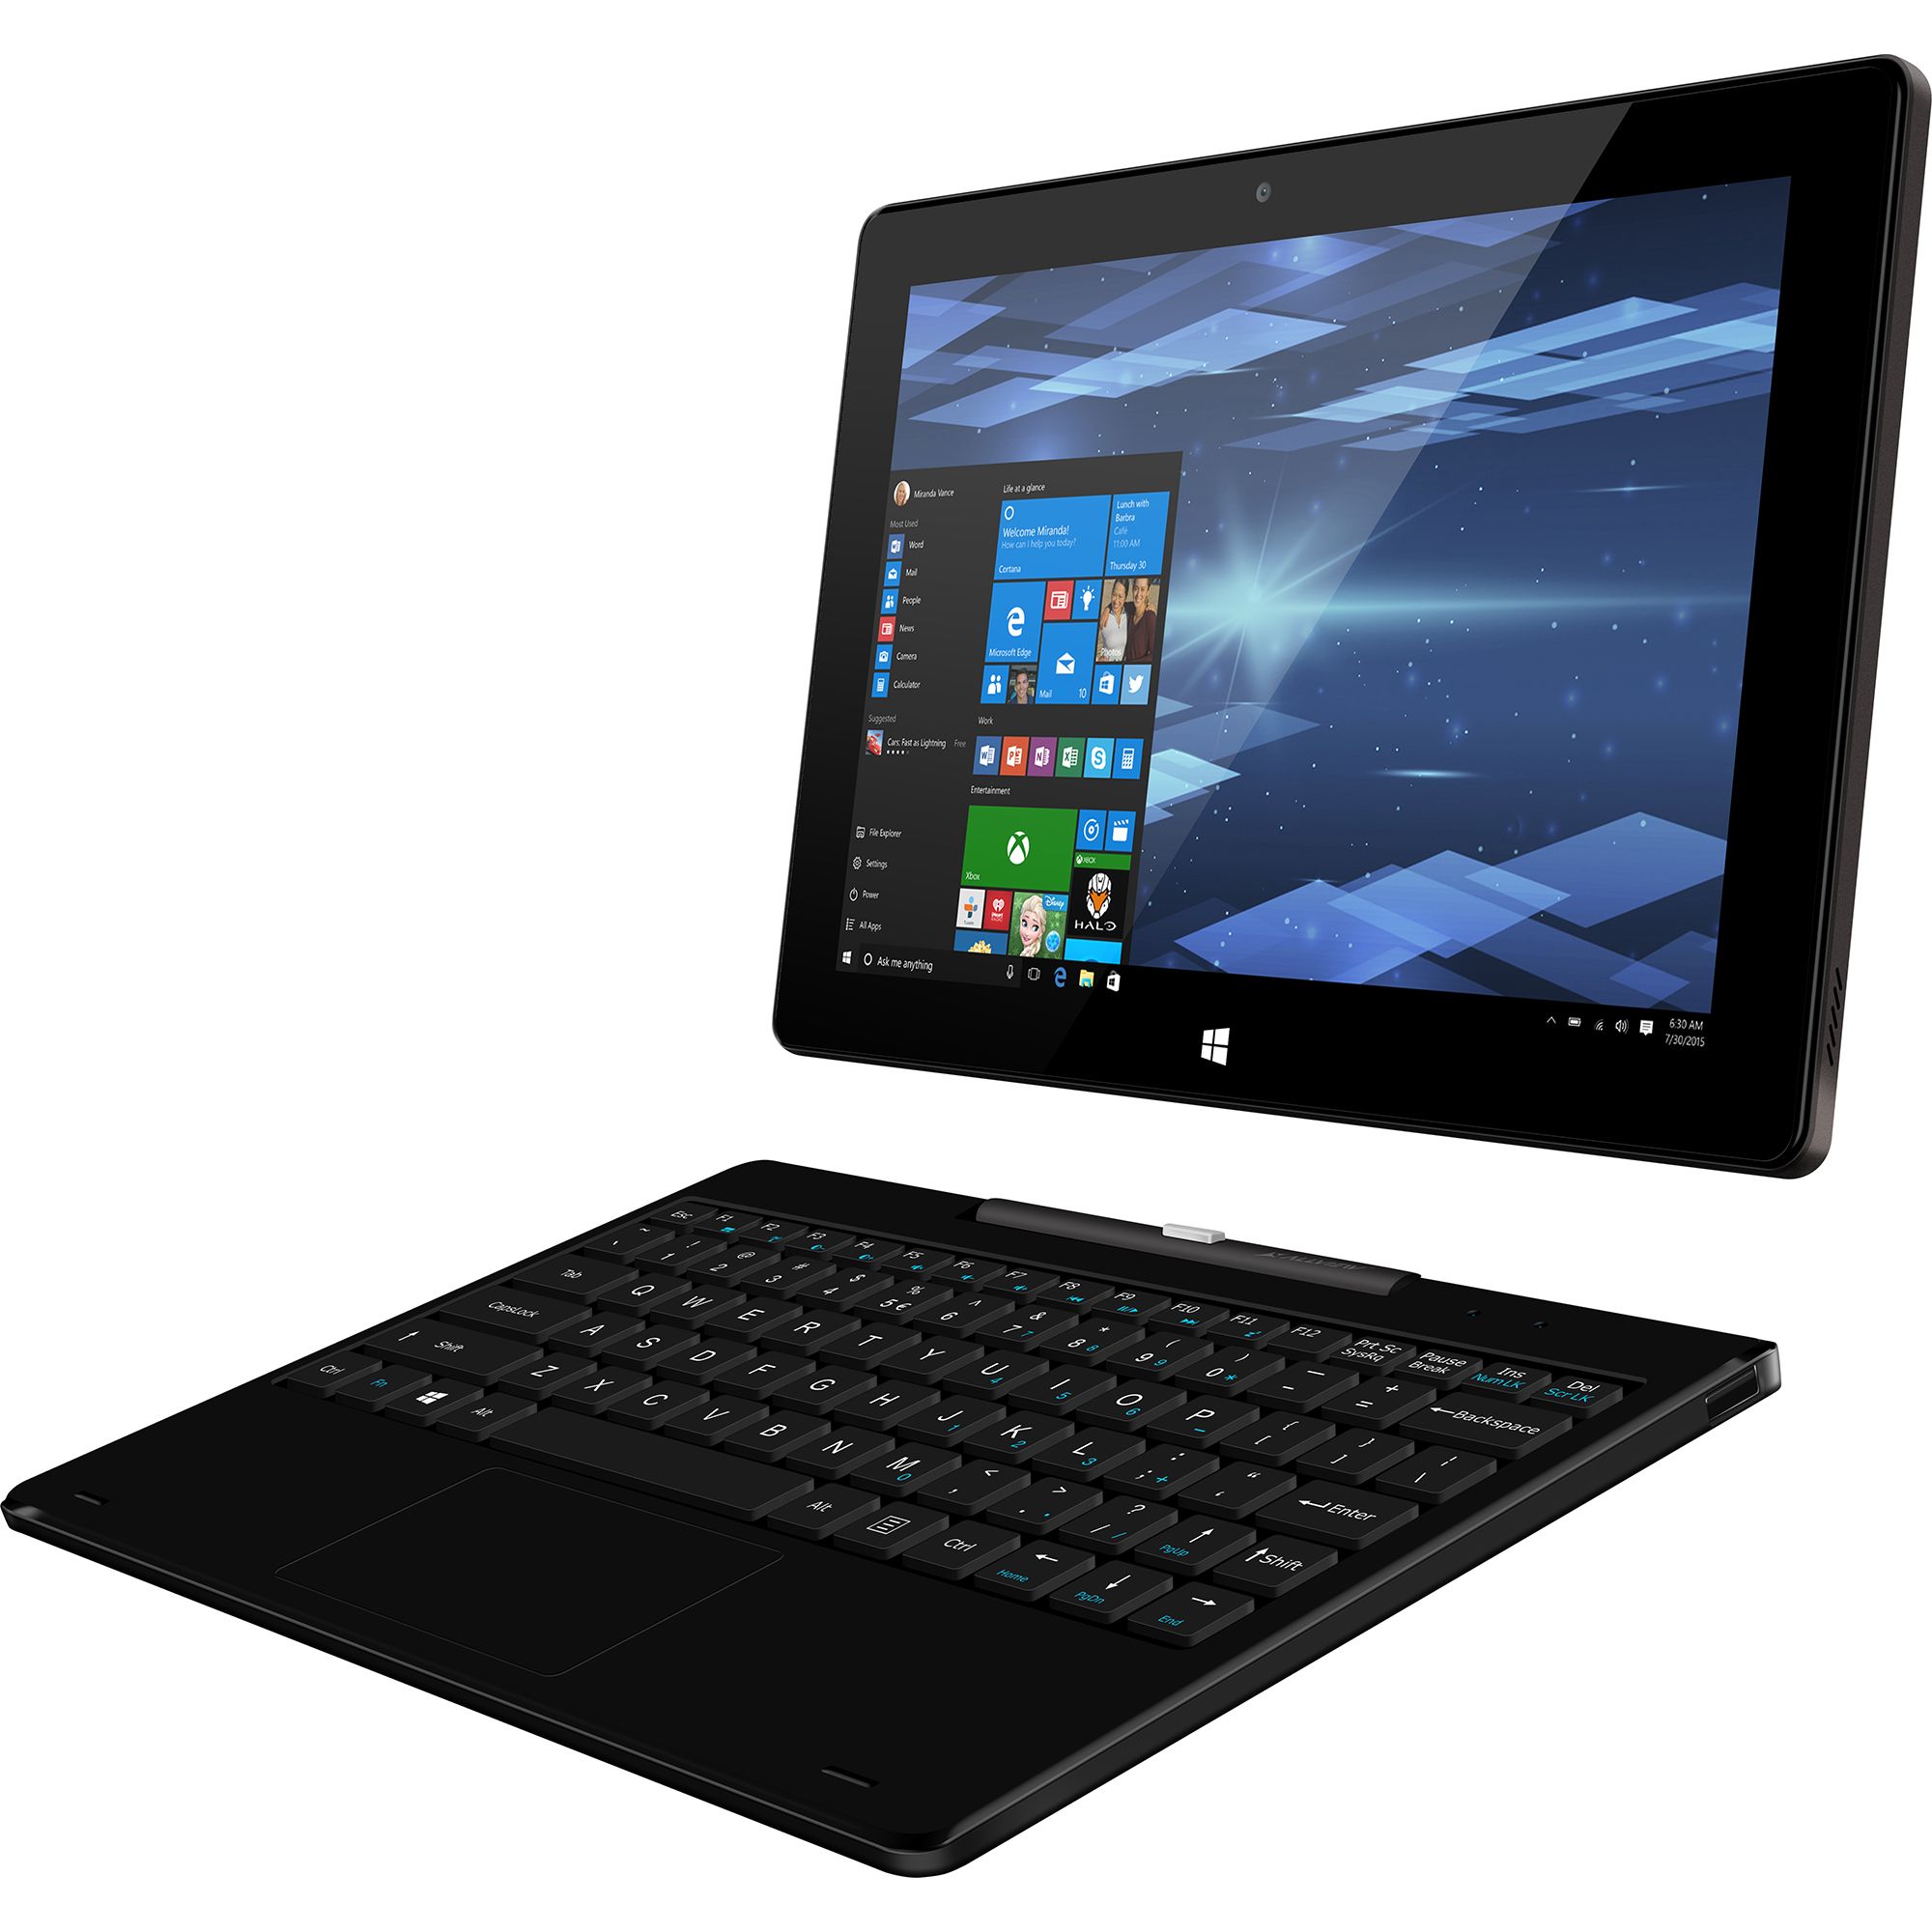  Laptop 2 in 1 Allview Wi1001N, Intel Atom Z3735F, 2GB DDR3 HDD 32GB, Intel HD Graphics, Windows 10 Home 